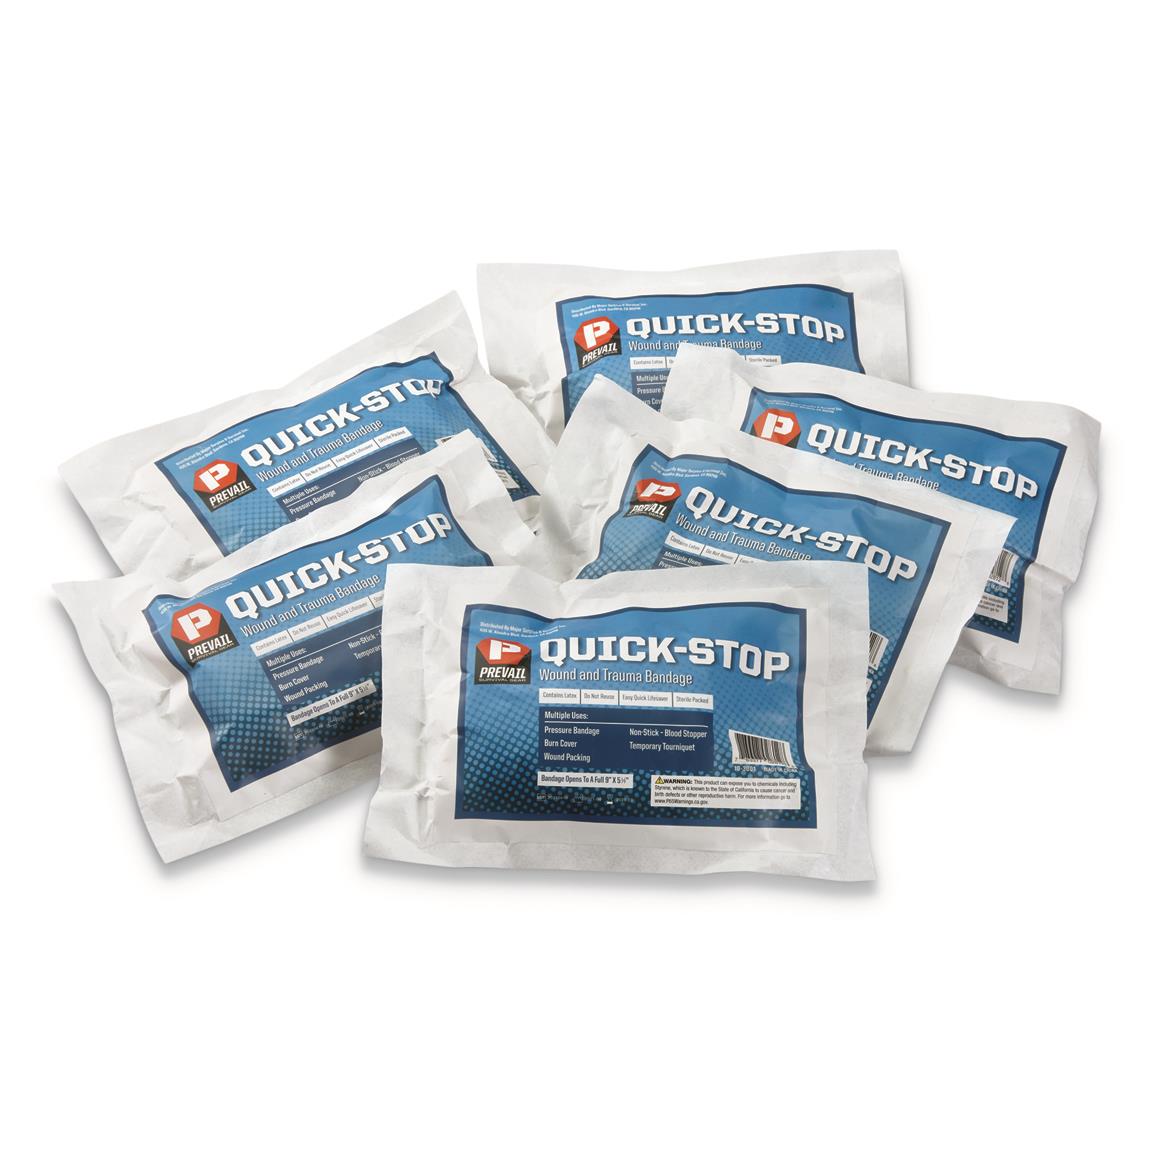 U.S. Municipal Surplus Prevail Quick-Stop Trauma Bandages, 6 Pack, New